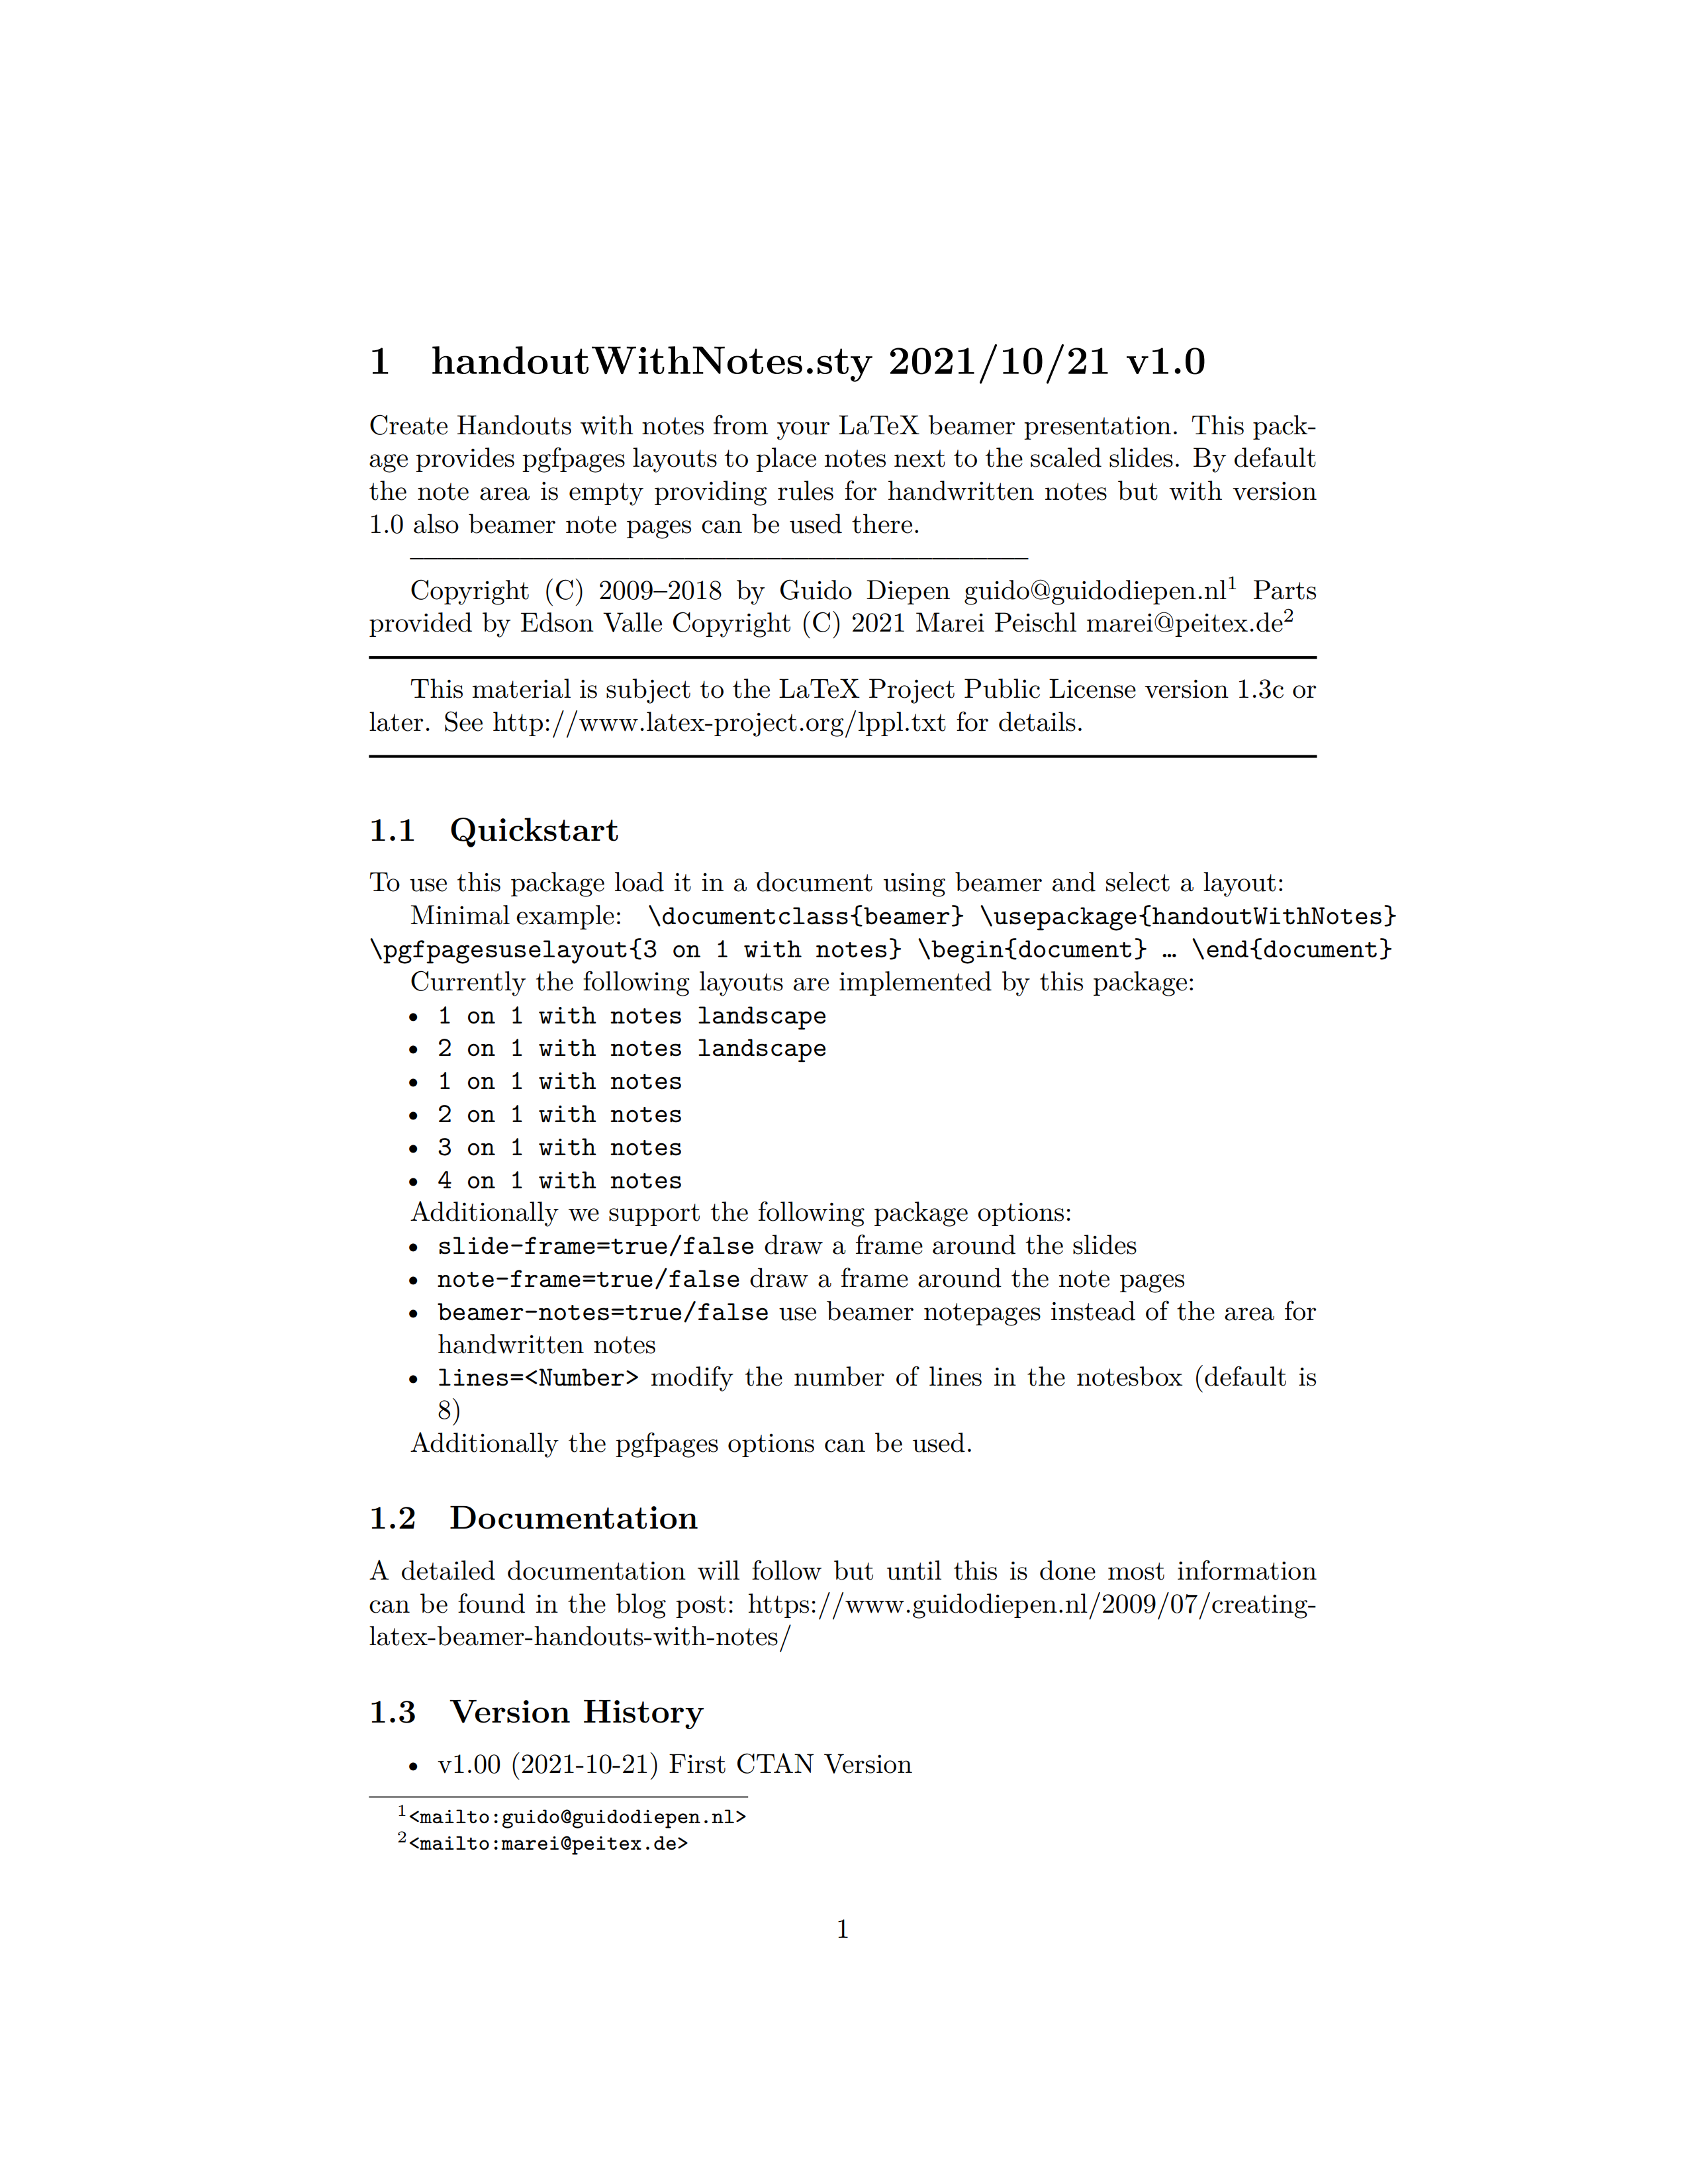 handoutWithNotes 宏包 pdf 格式的文档